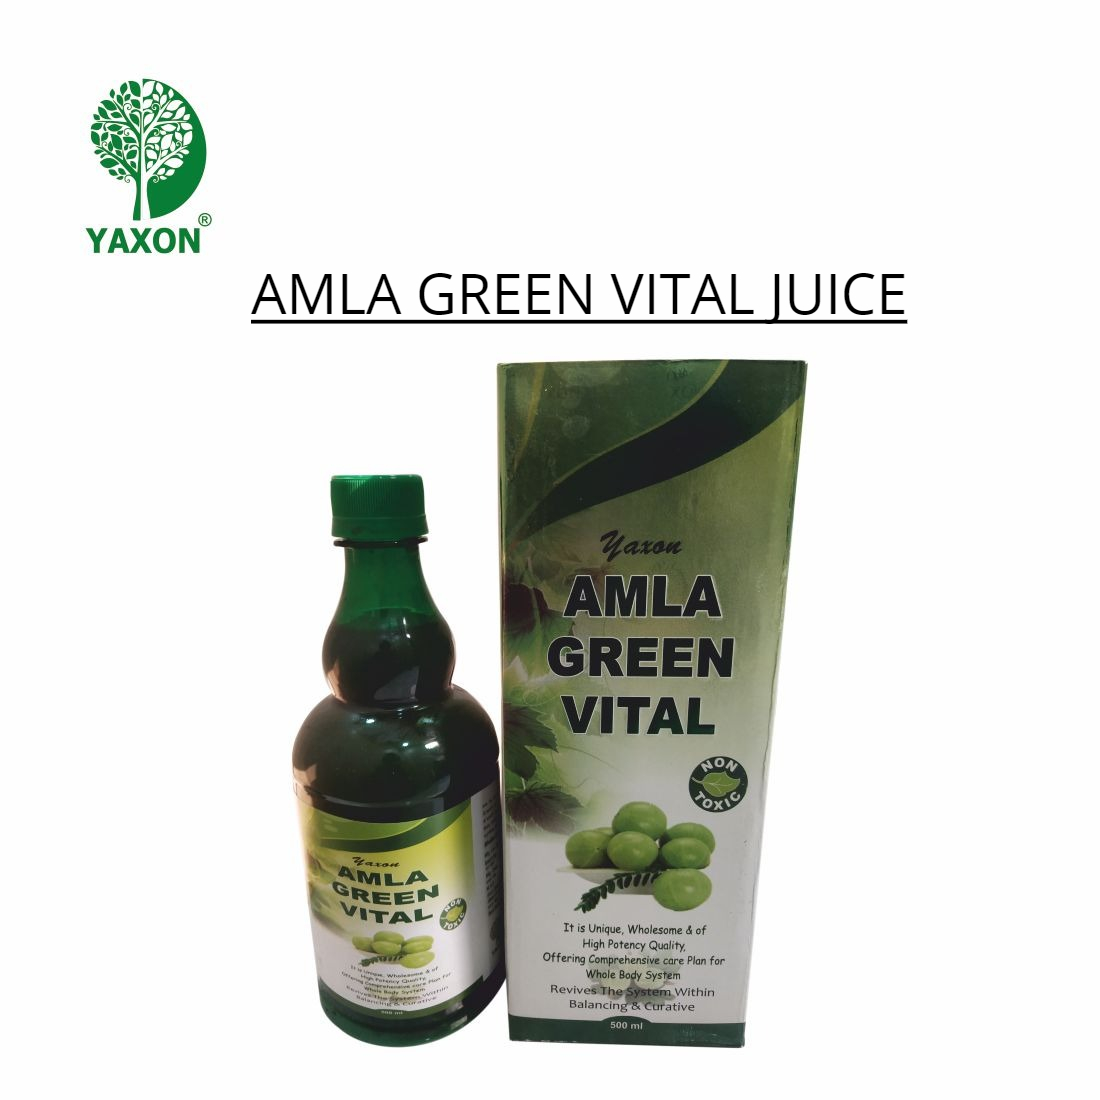 YAXON AMLA GREEN VITAL Ayurvedic Juice